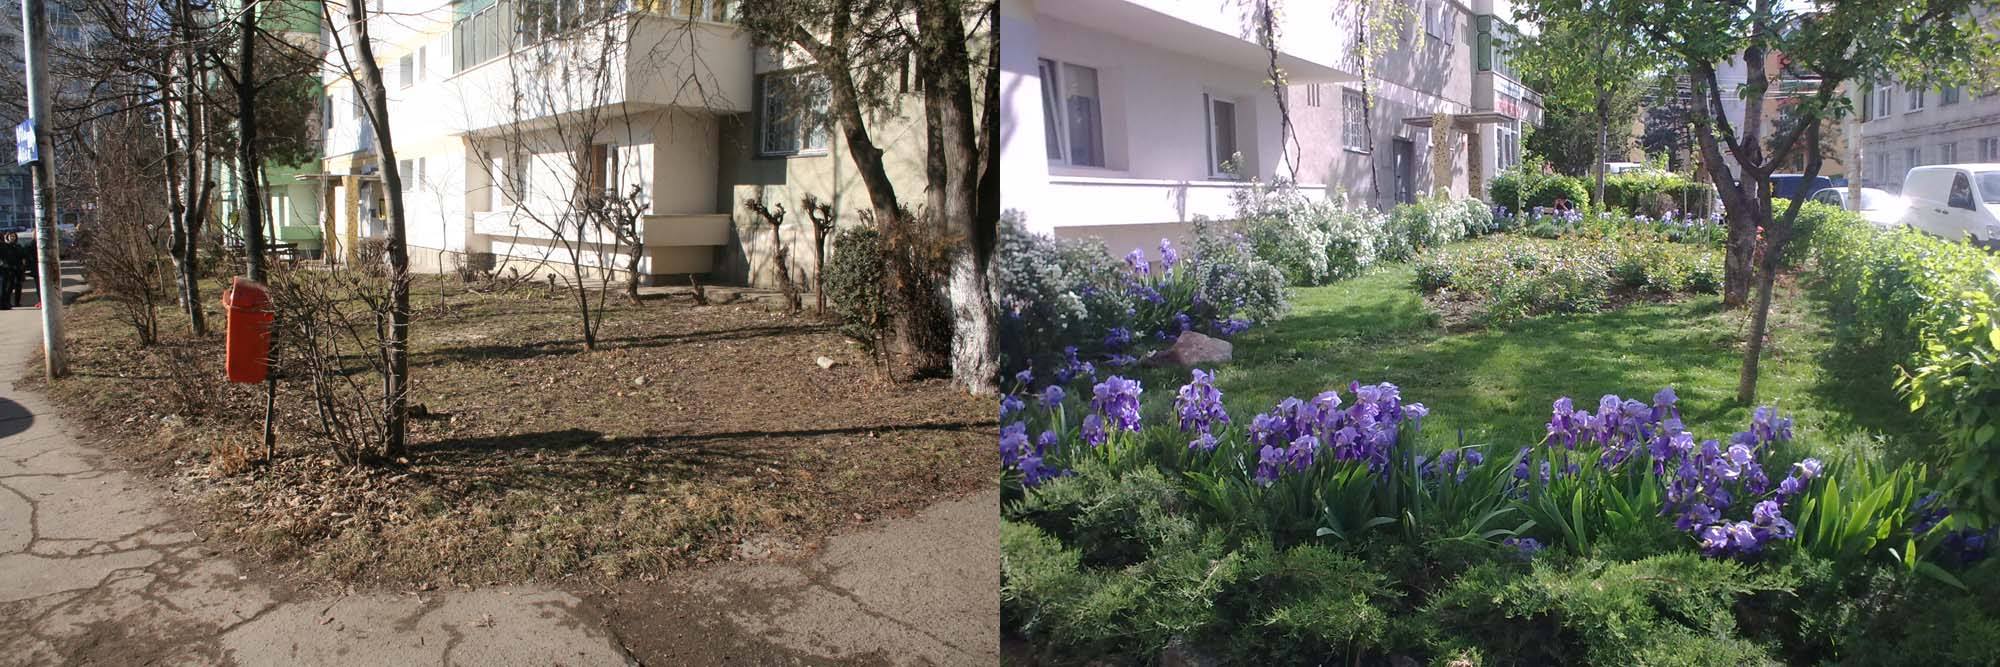 growing a garden when living in an apartment building